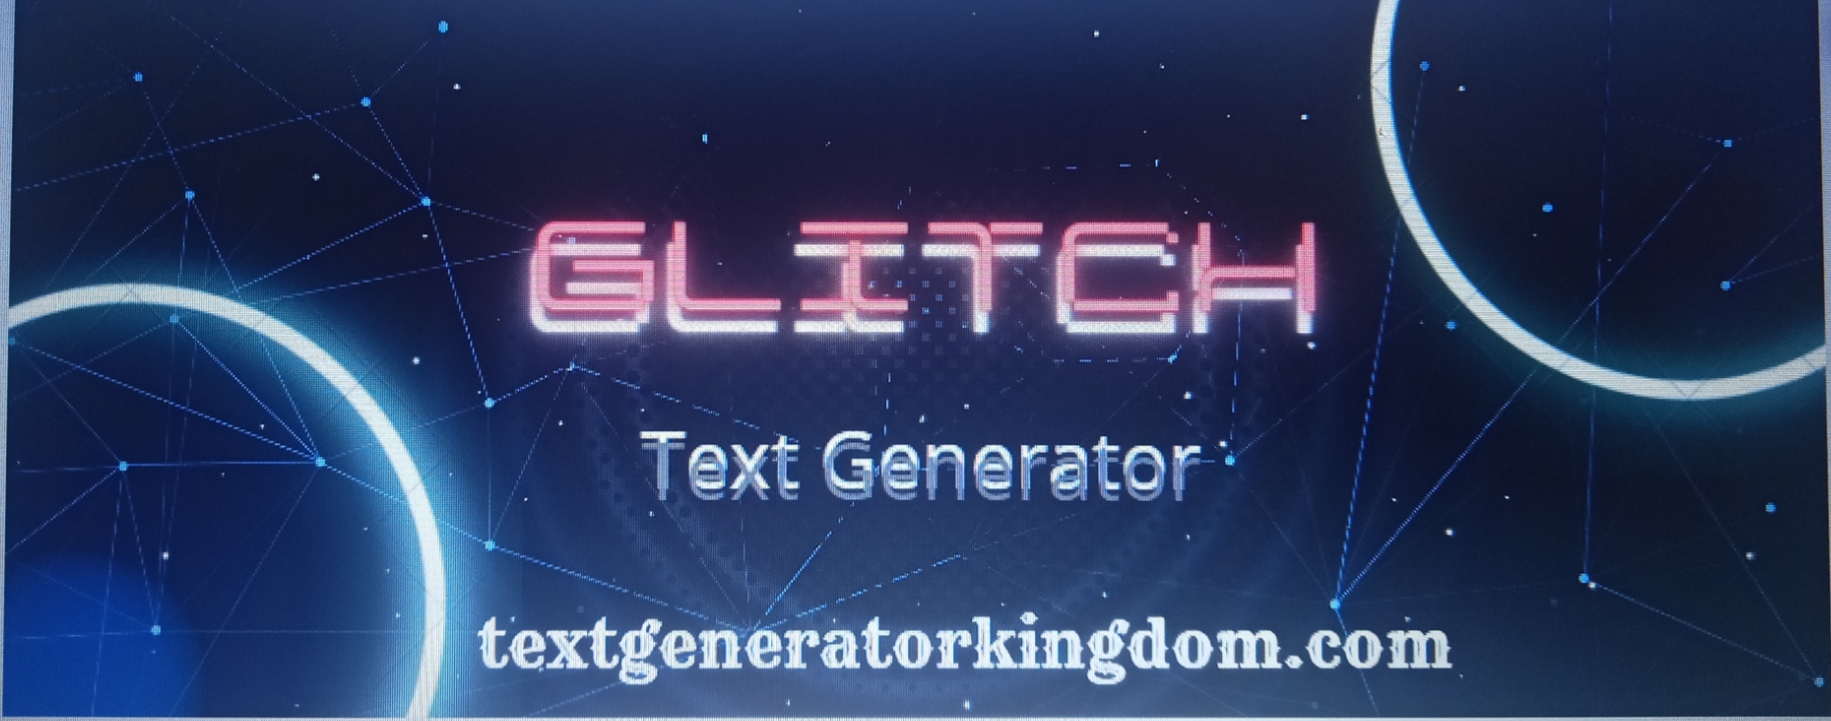 Glitch Text Generator (Copy and Paste) G̀ļ҉ì̶t̷̸͜c̕h̶̕ ͝TÈ̶xt